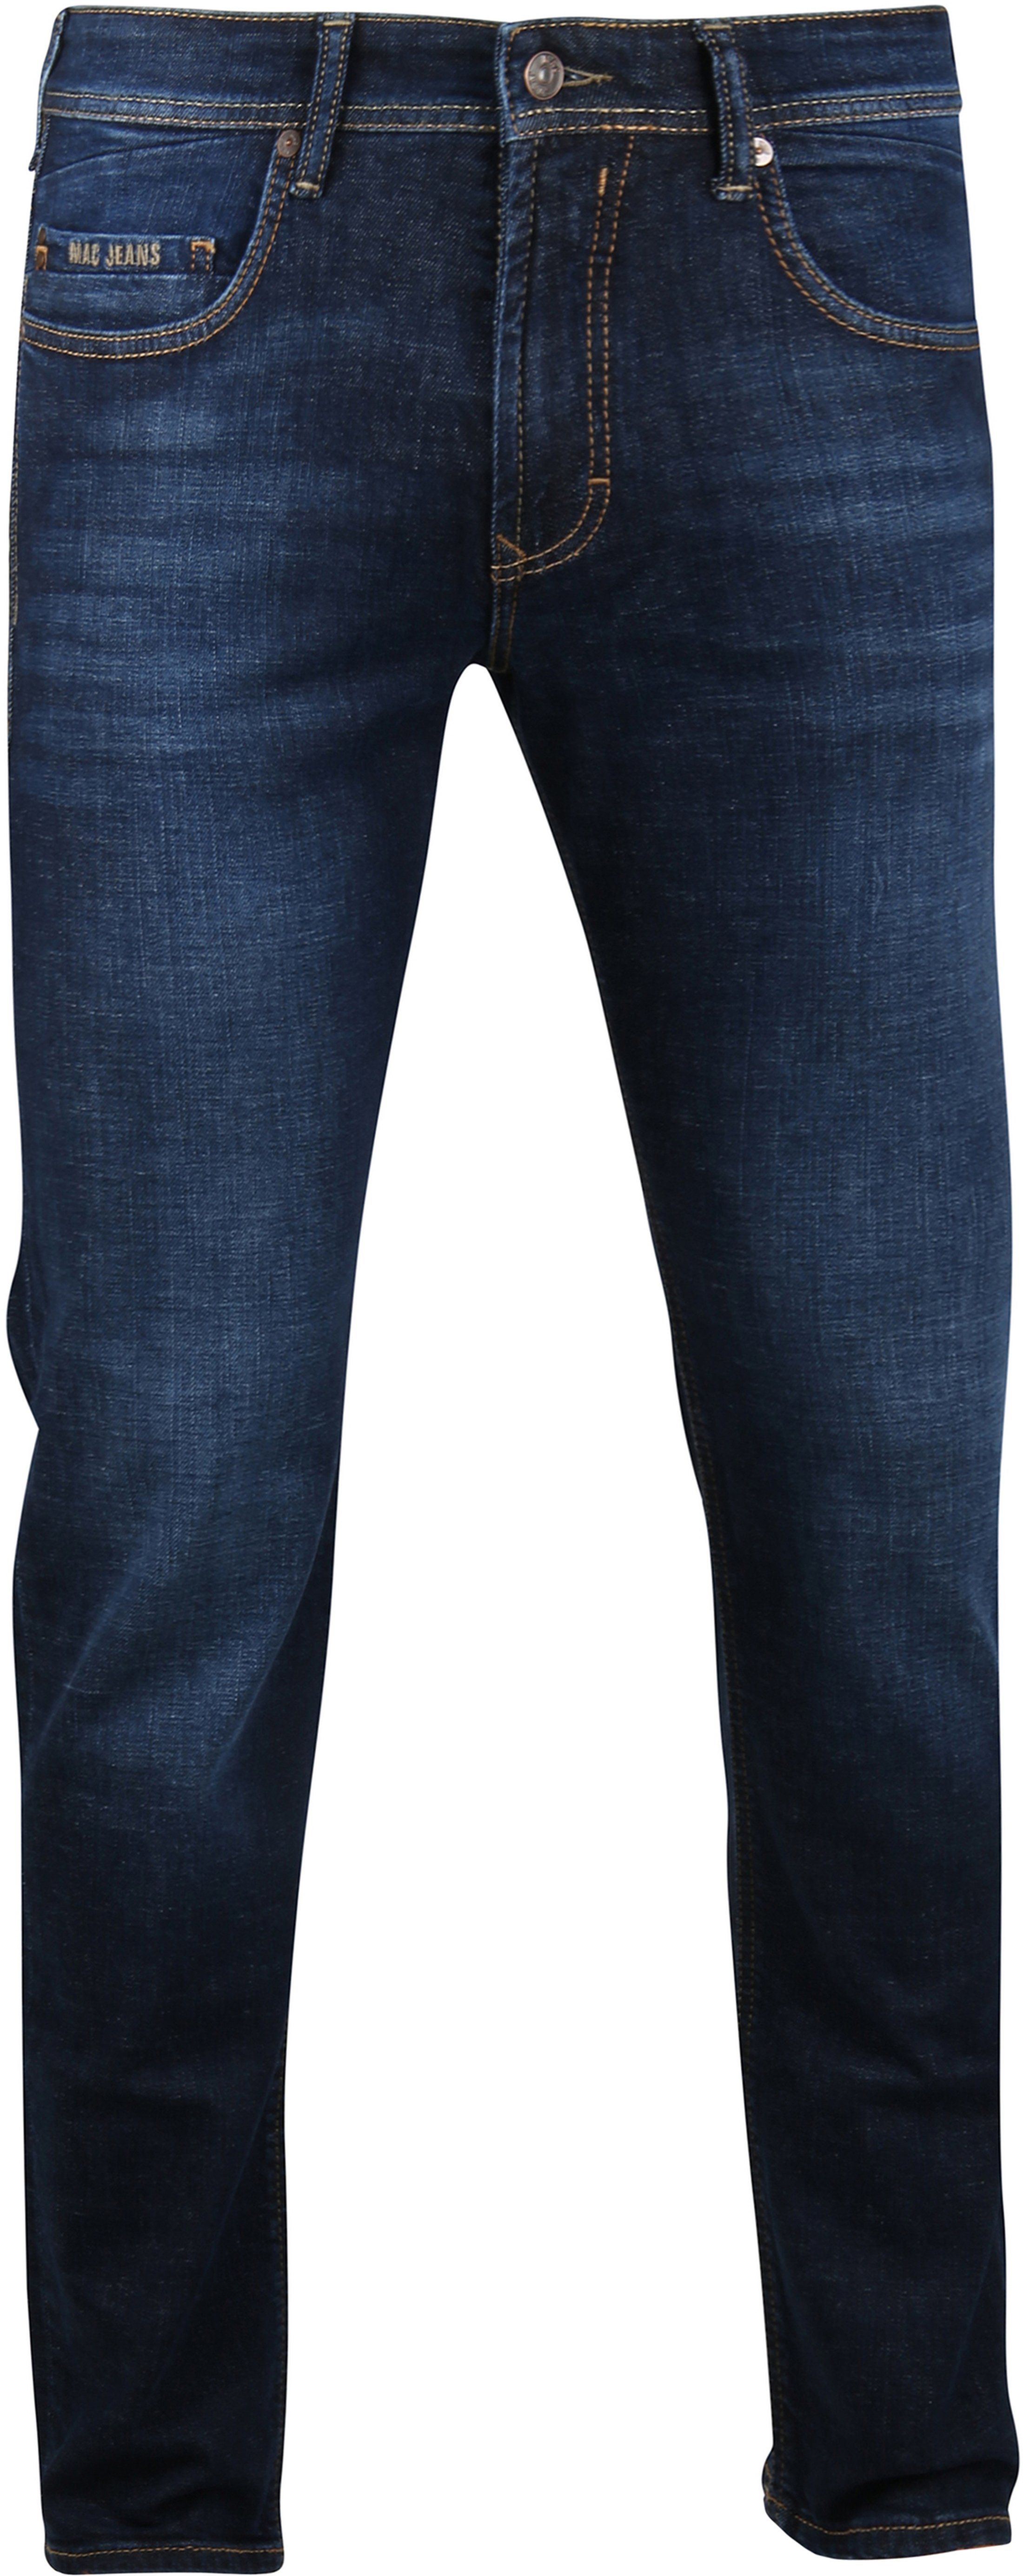 Mac Pants Ben Navy Dark Blue Blue size W 31